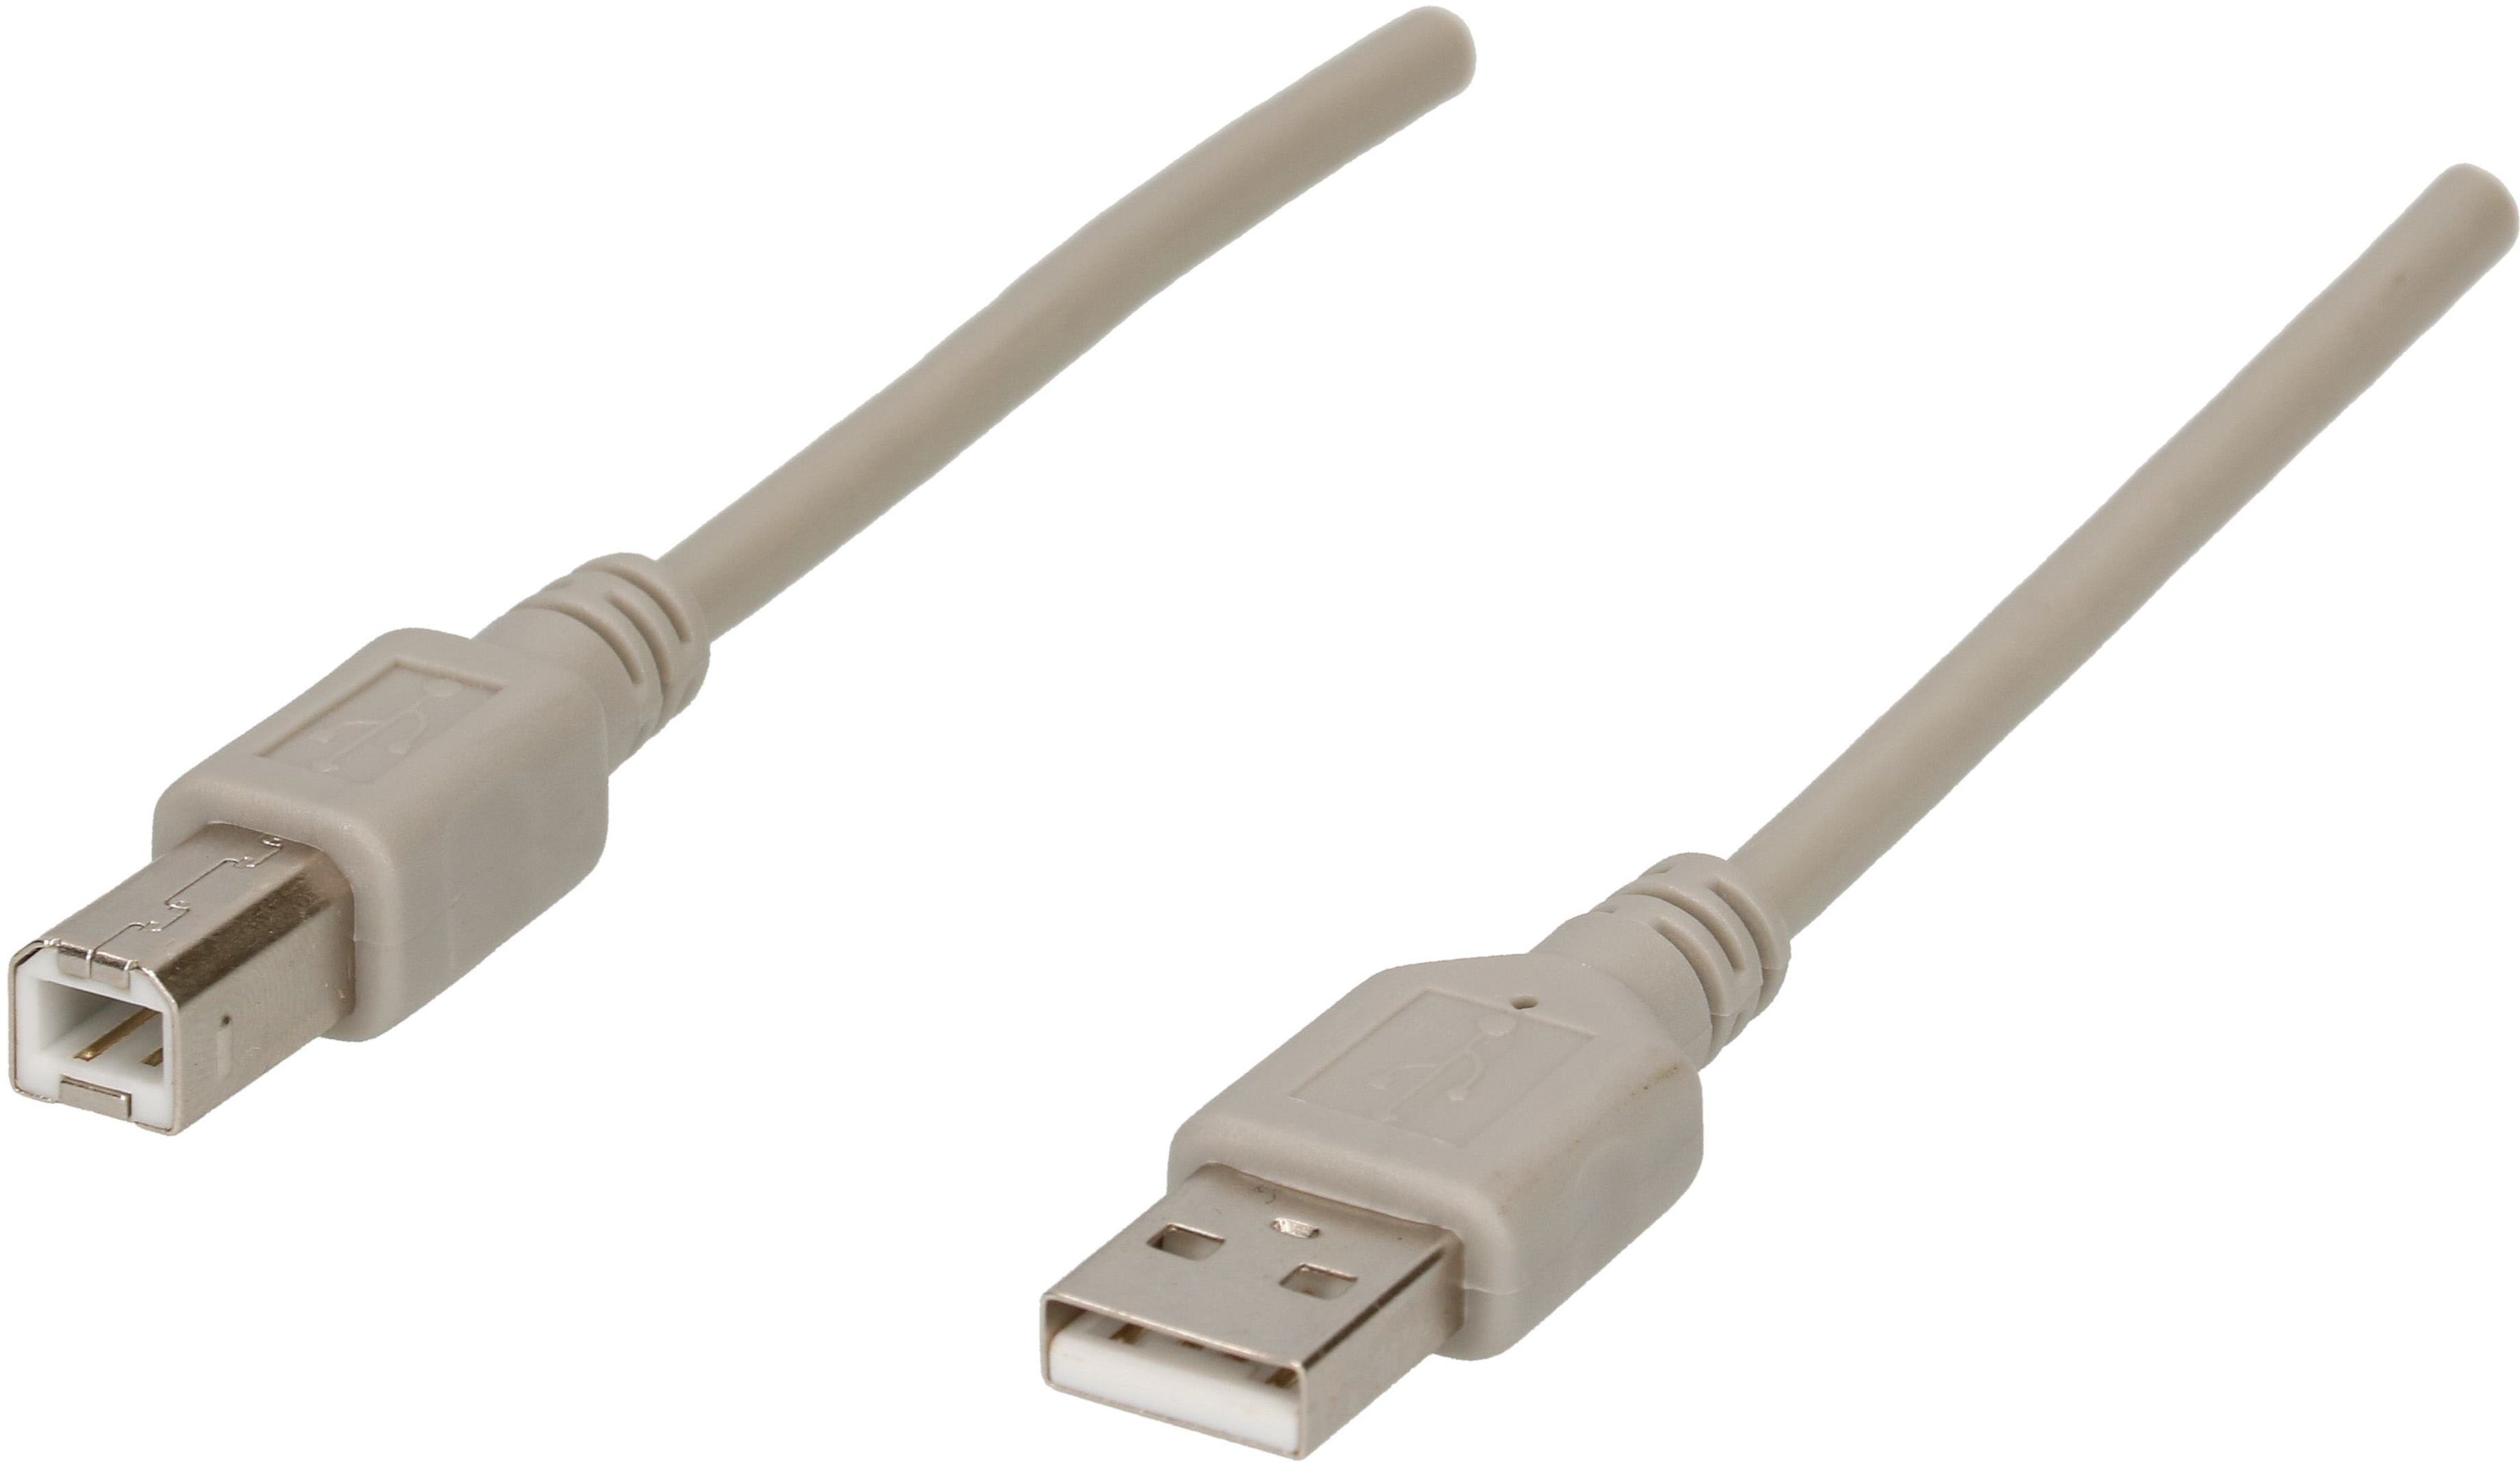 USB Kabel Version 2.0 1.5m grau